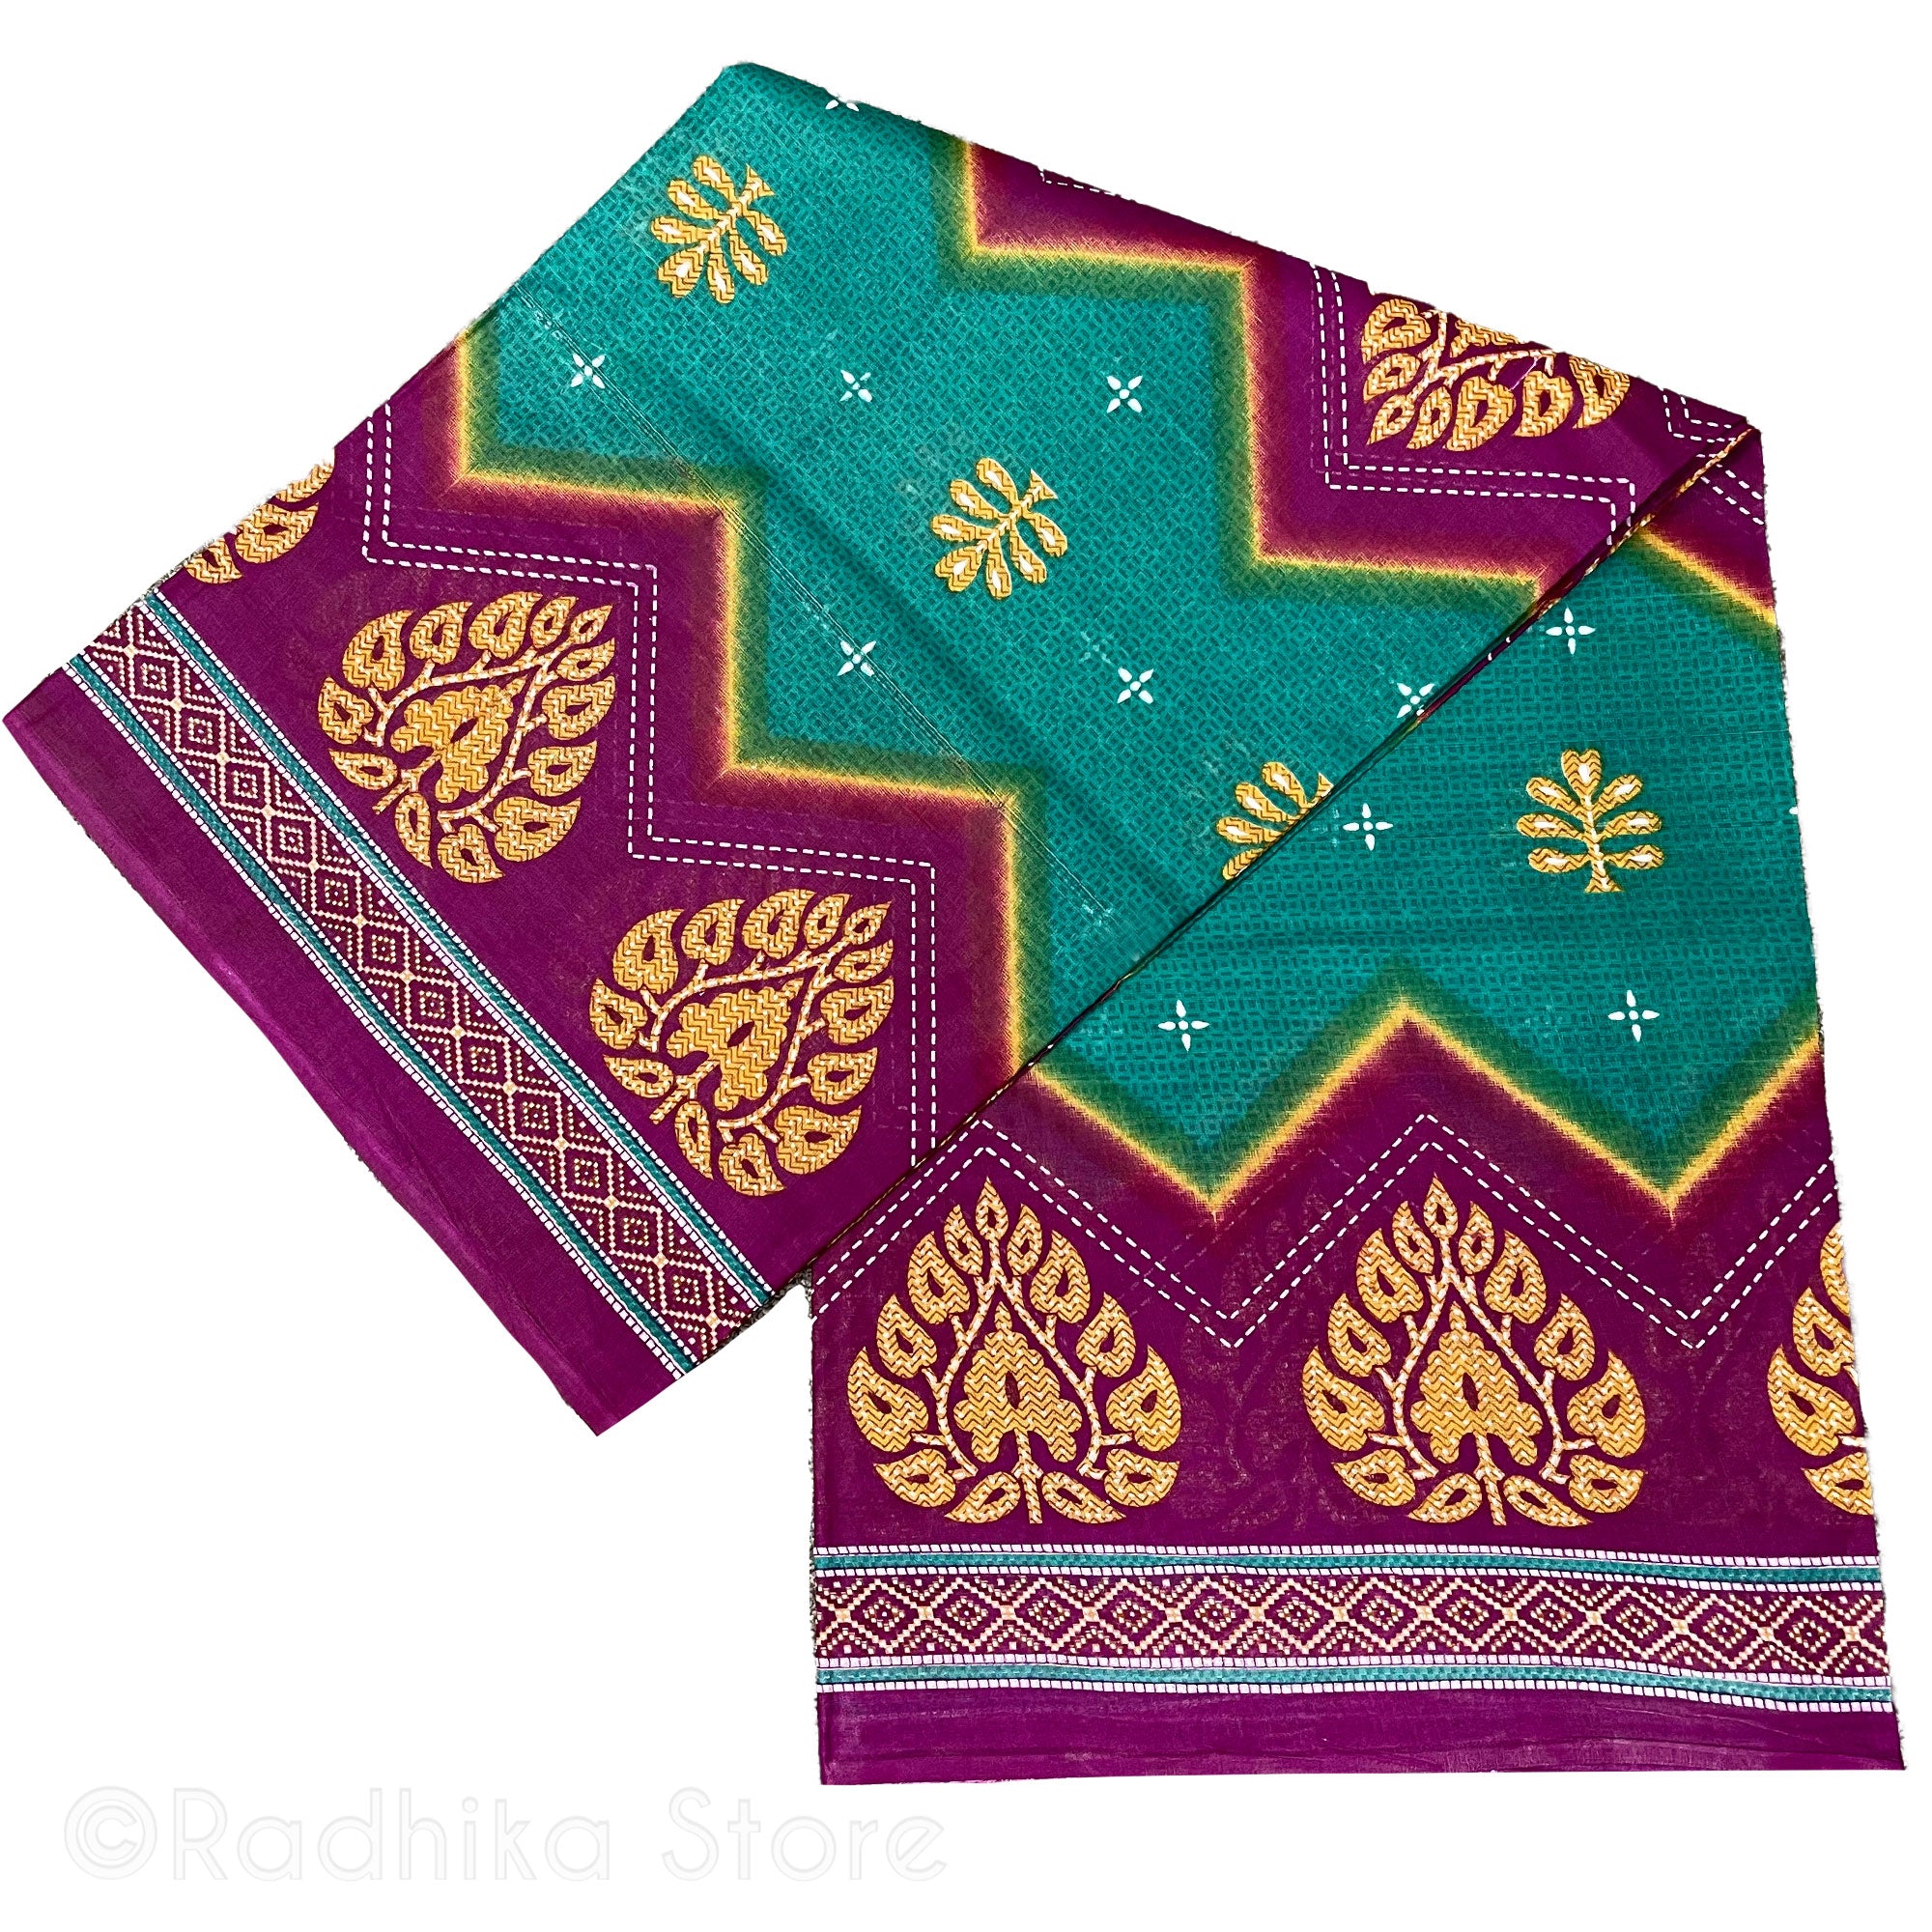 Vedic Designs - Purple and Teal- Cotton Saree